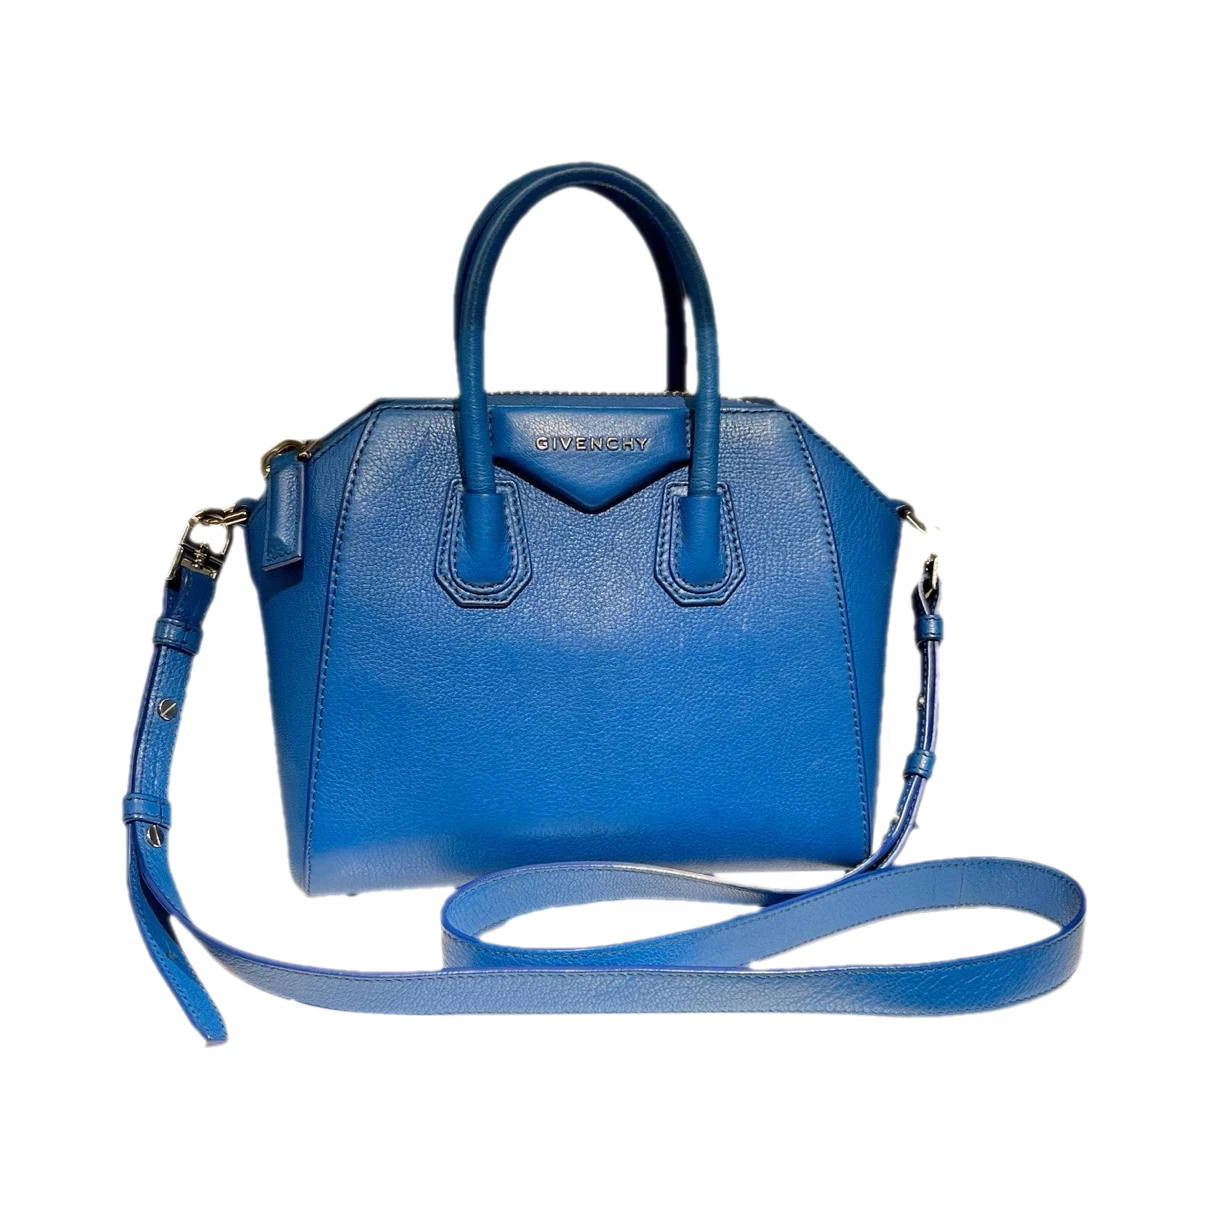 Pre-owned Givenchy Antigona Leather Handbag In Blue